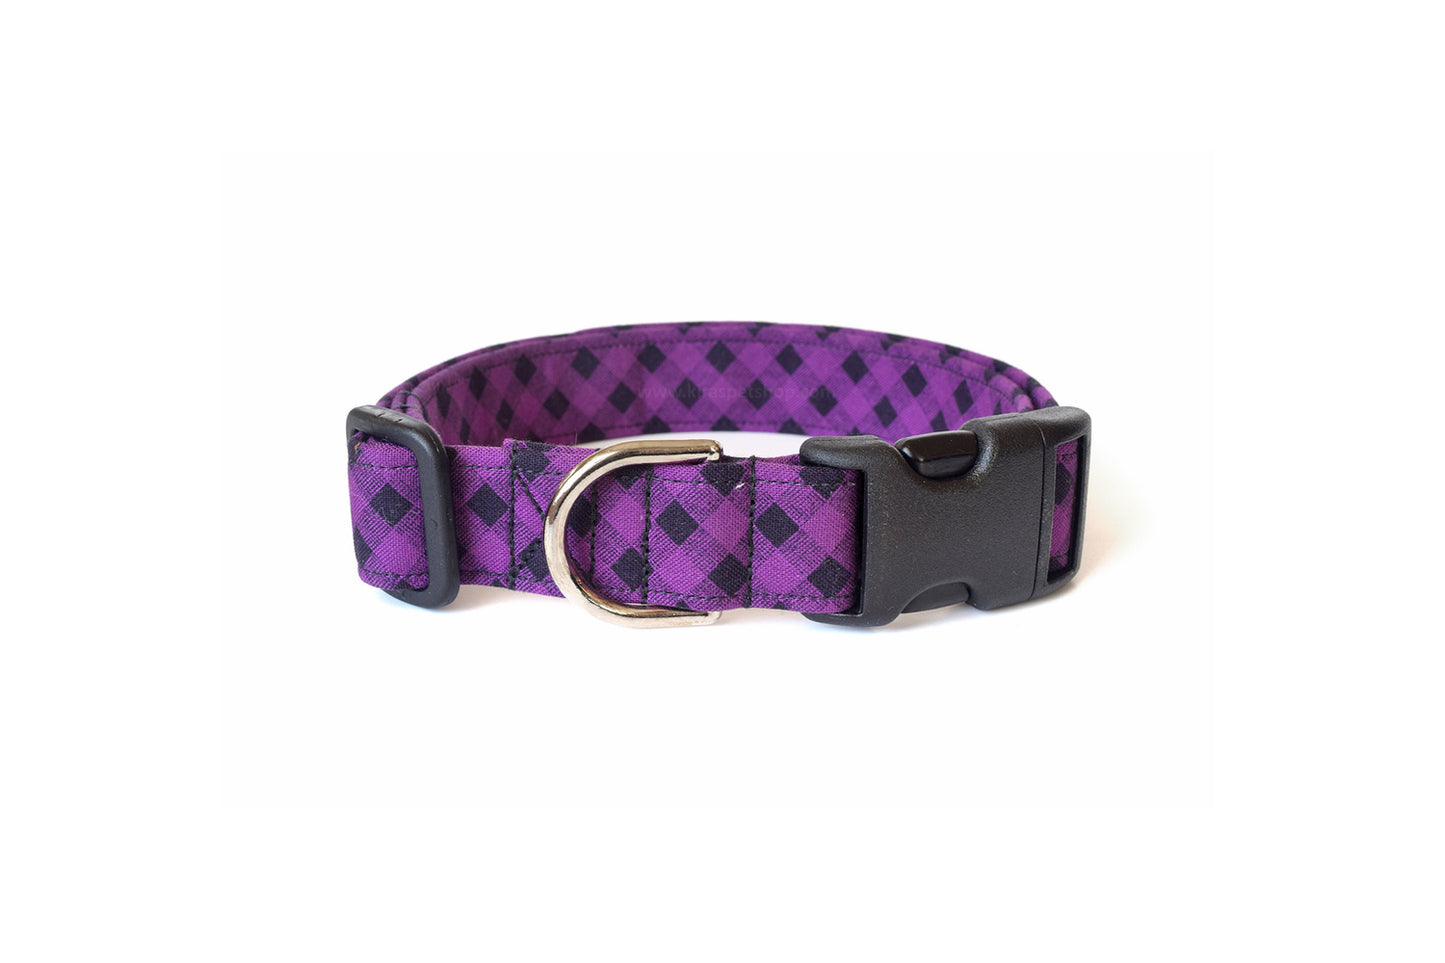 Purple & Black Plaid Dog Collar - Handmade by Kira's Pet Shop